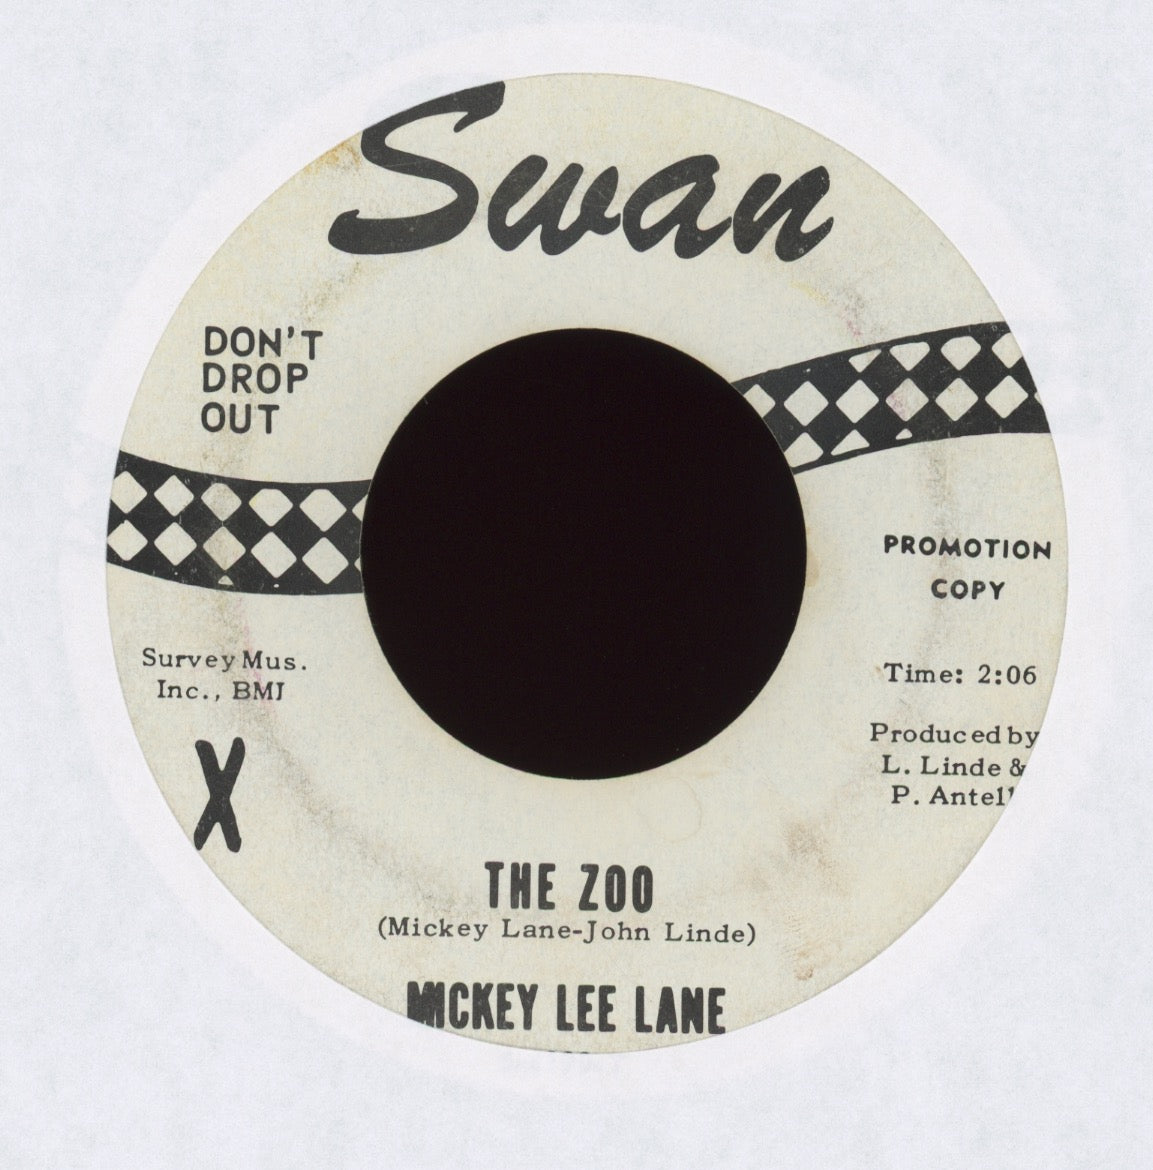 Mickey Lee Lane - The Zoo on Swan Promo